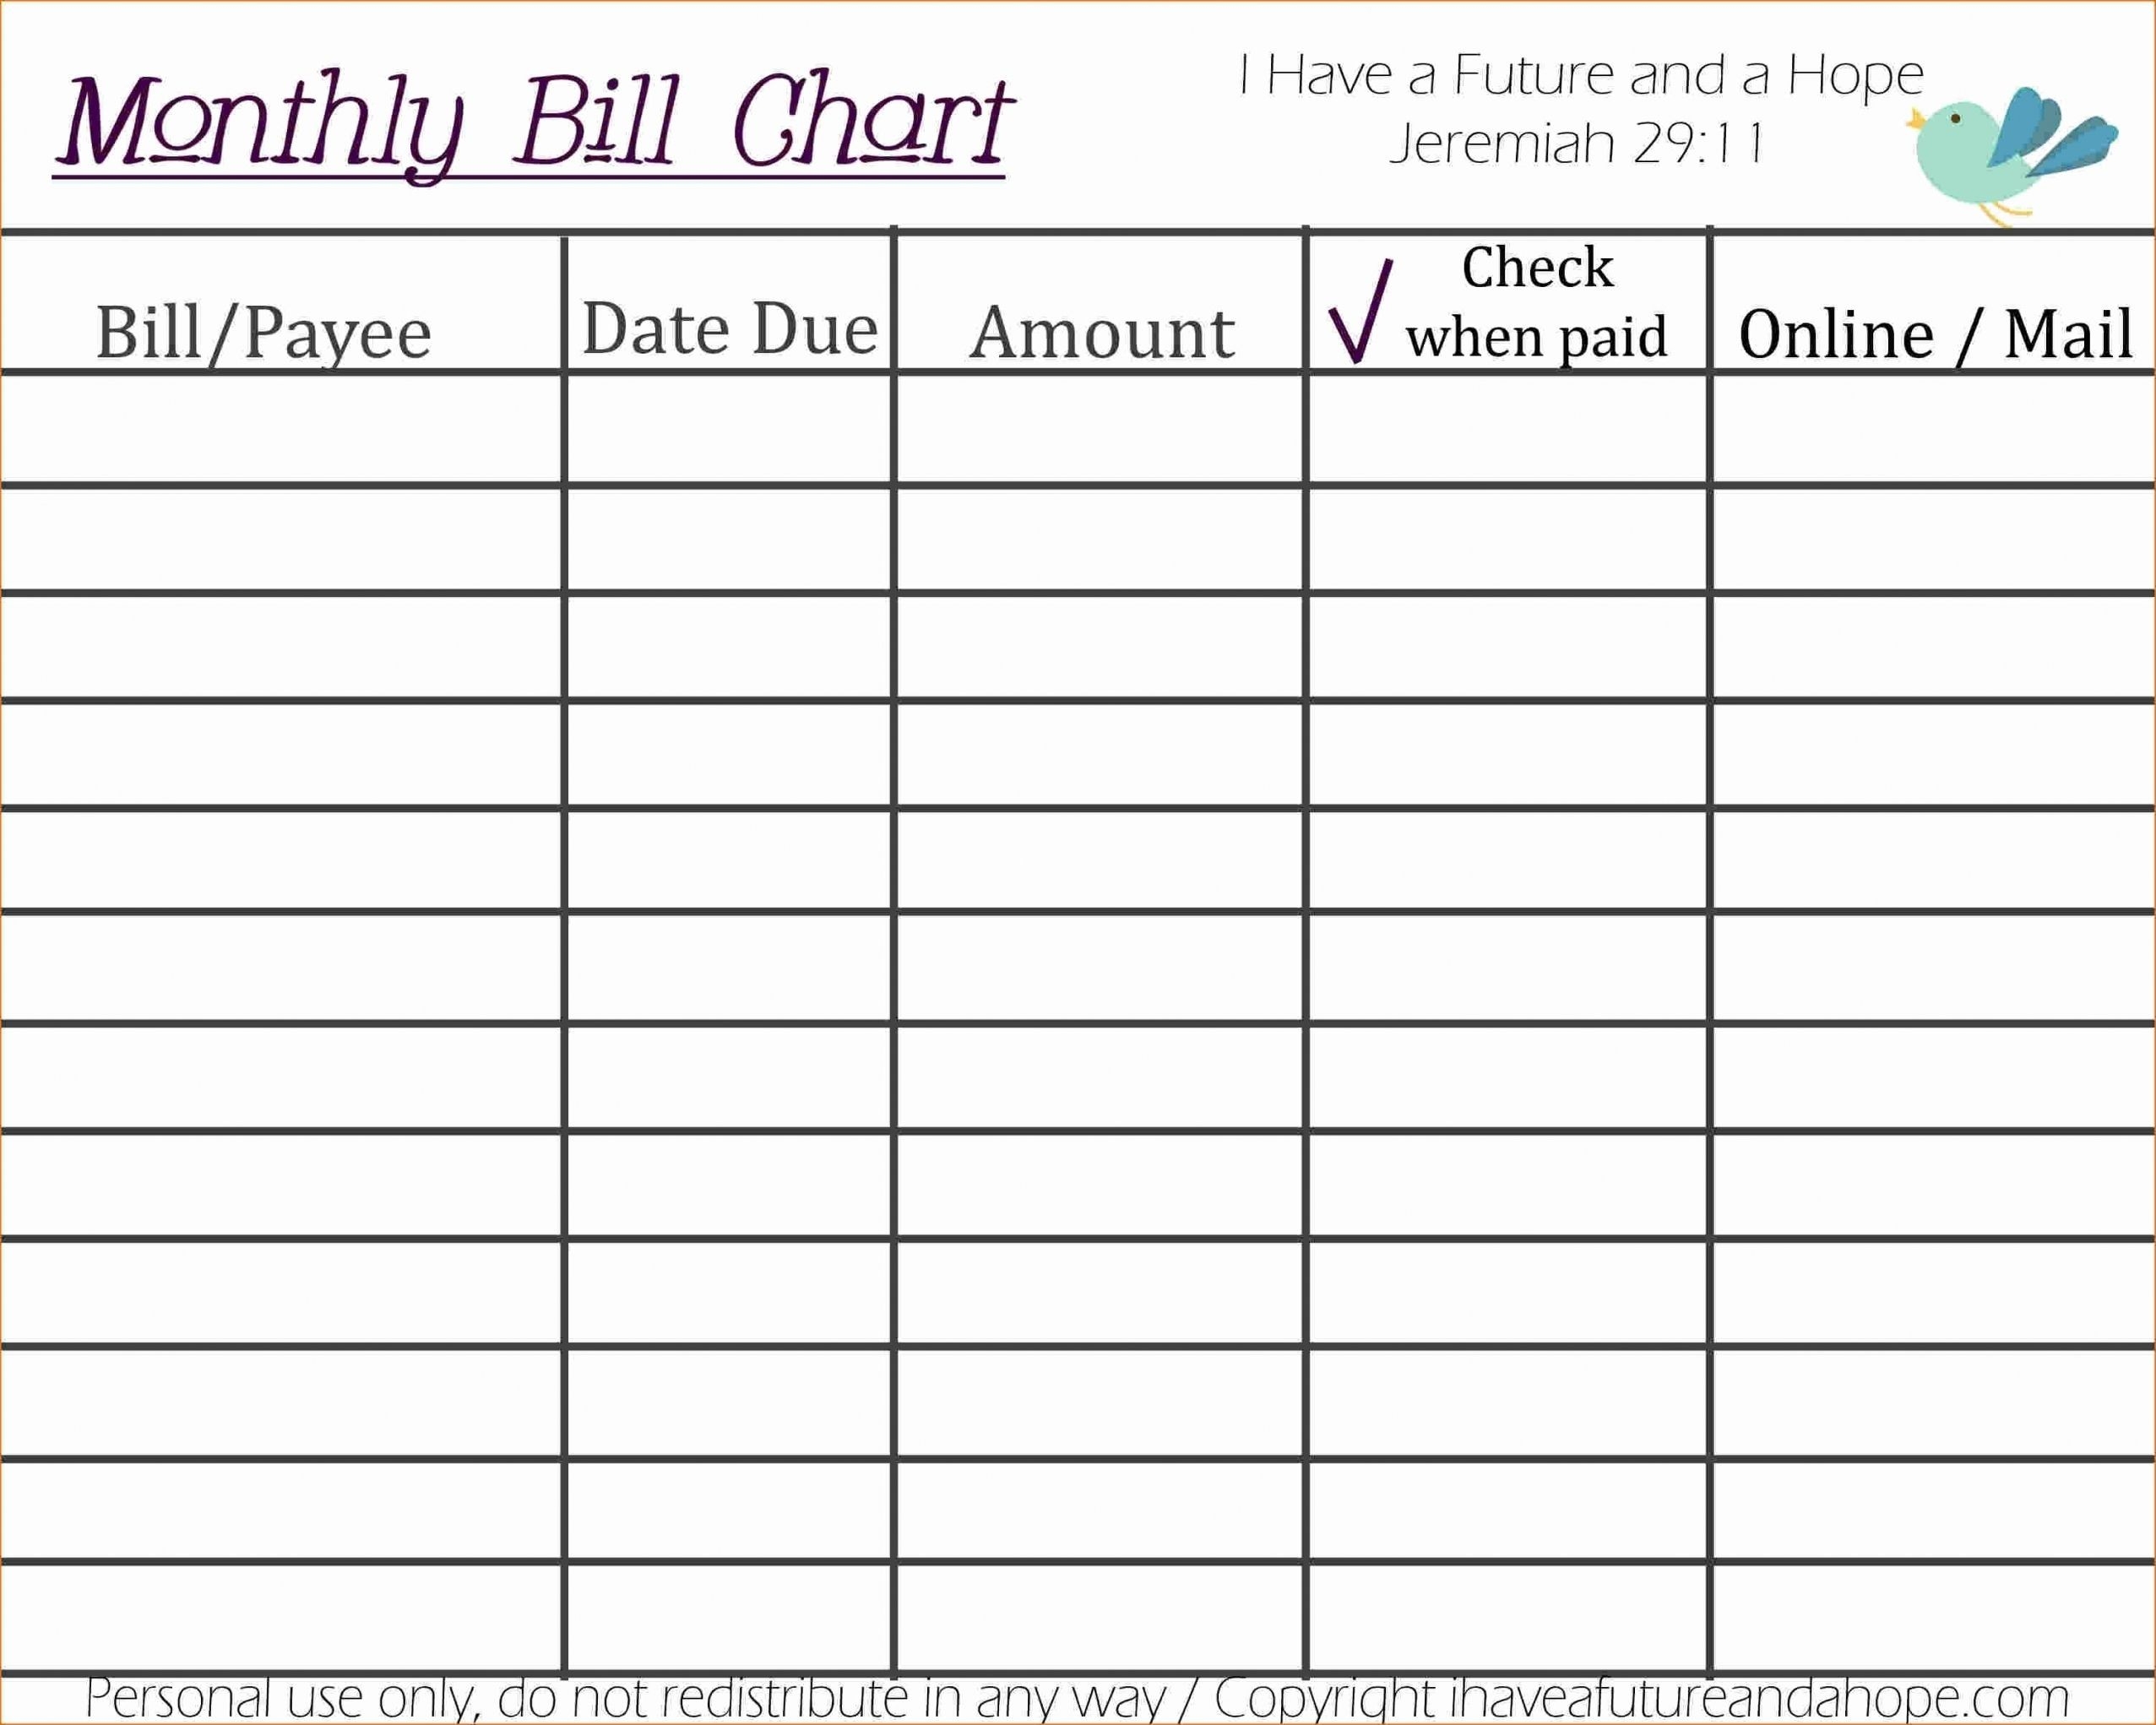 Free Printable Bill Calendar 2021 In 2020 | Budget  Bill Pay Calendar 2021